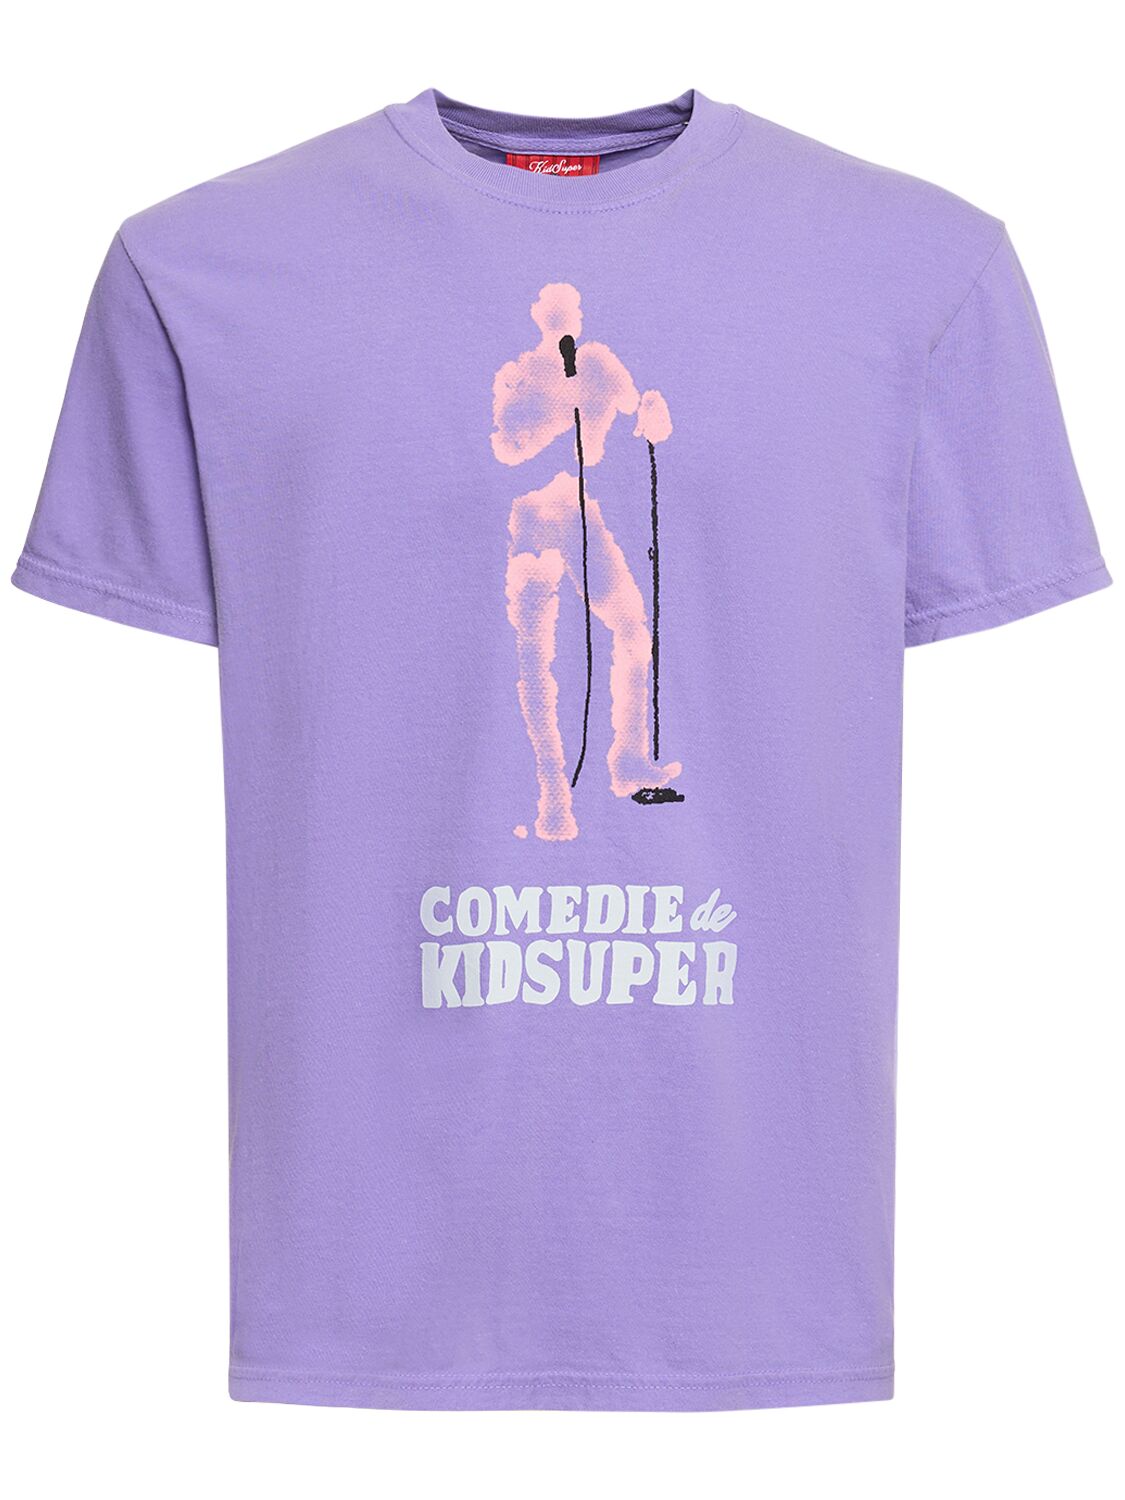 Kidsuper Comedie De  Cotton T-shirt In Purple,pink